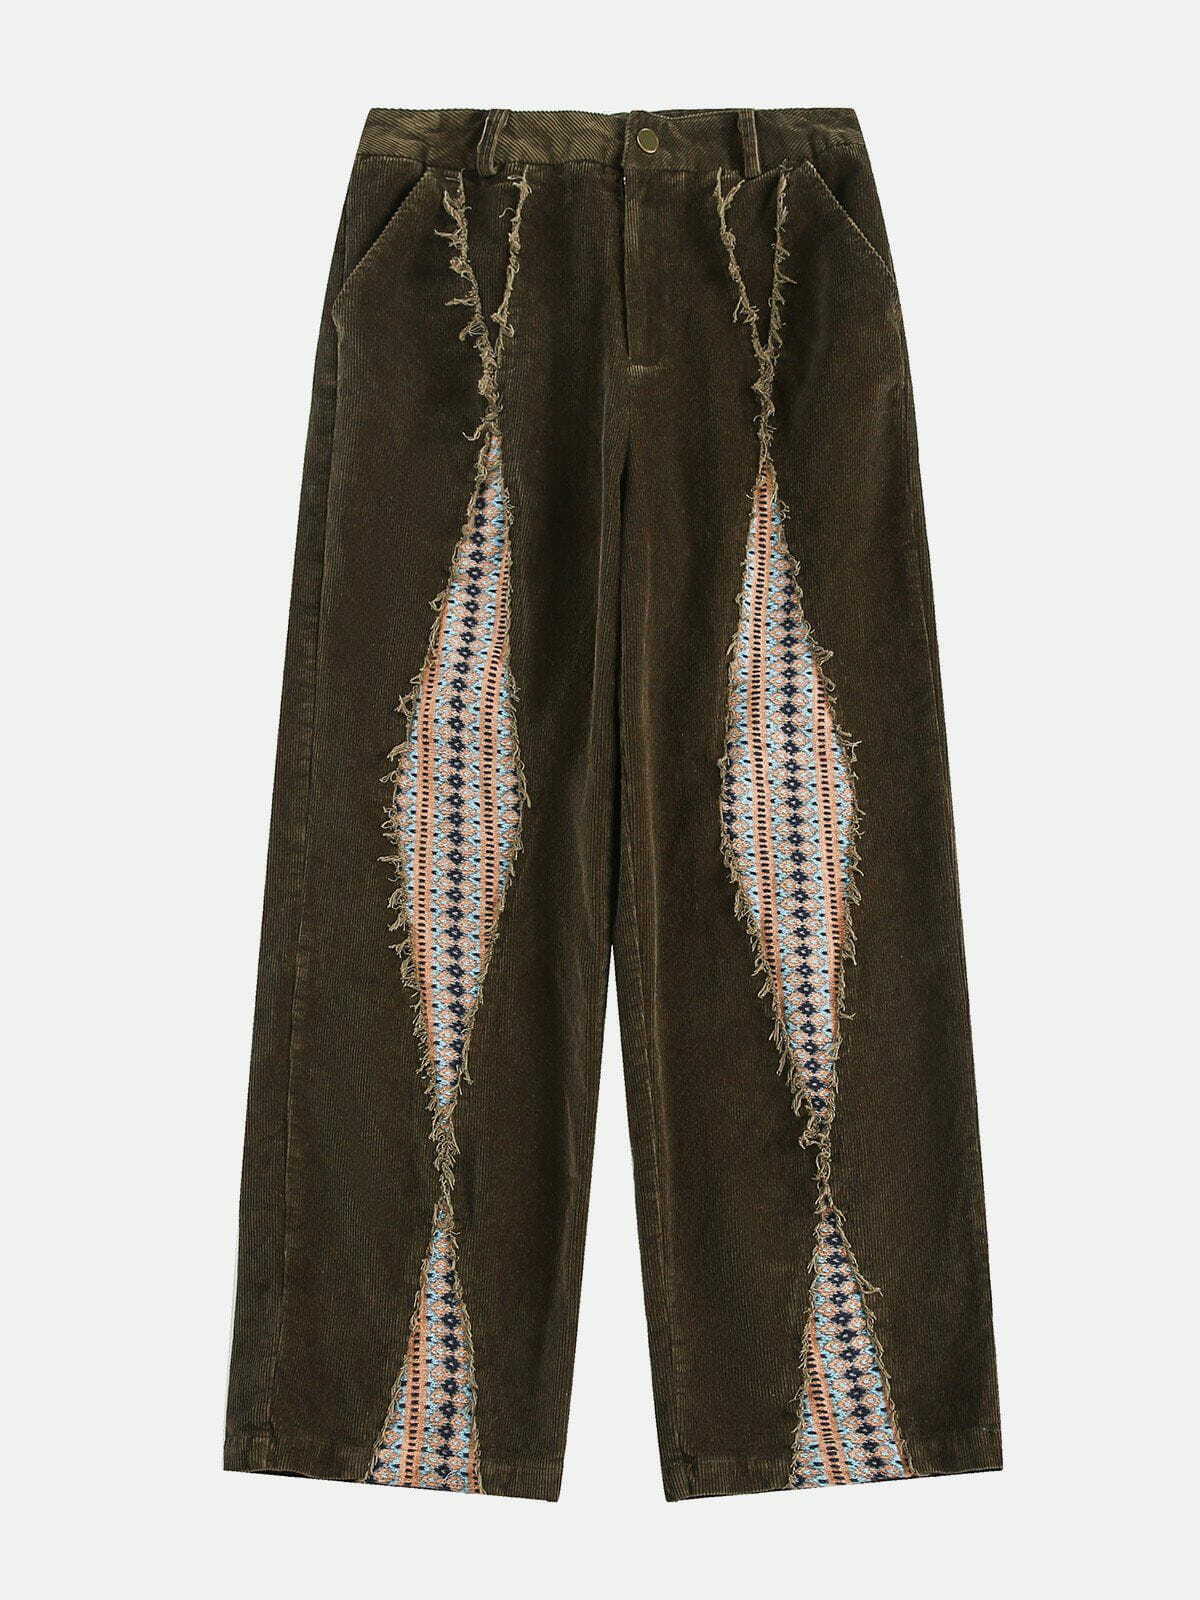 eclectic fringe rhomboid pants   youthful urban trend 5709